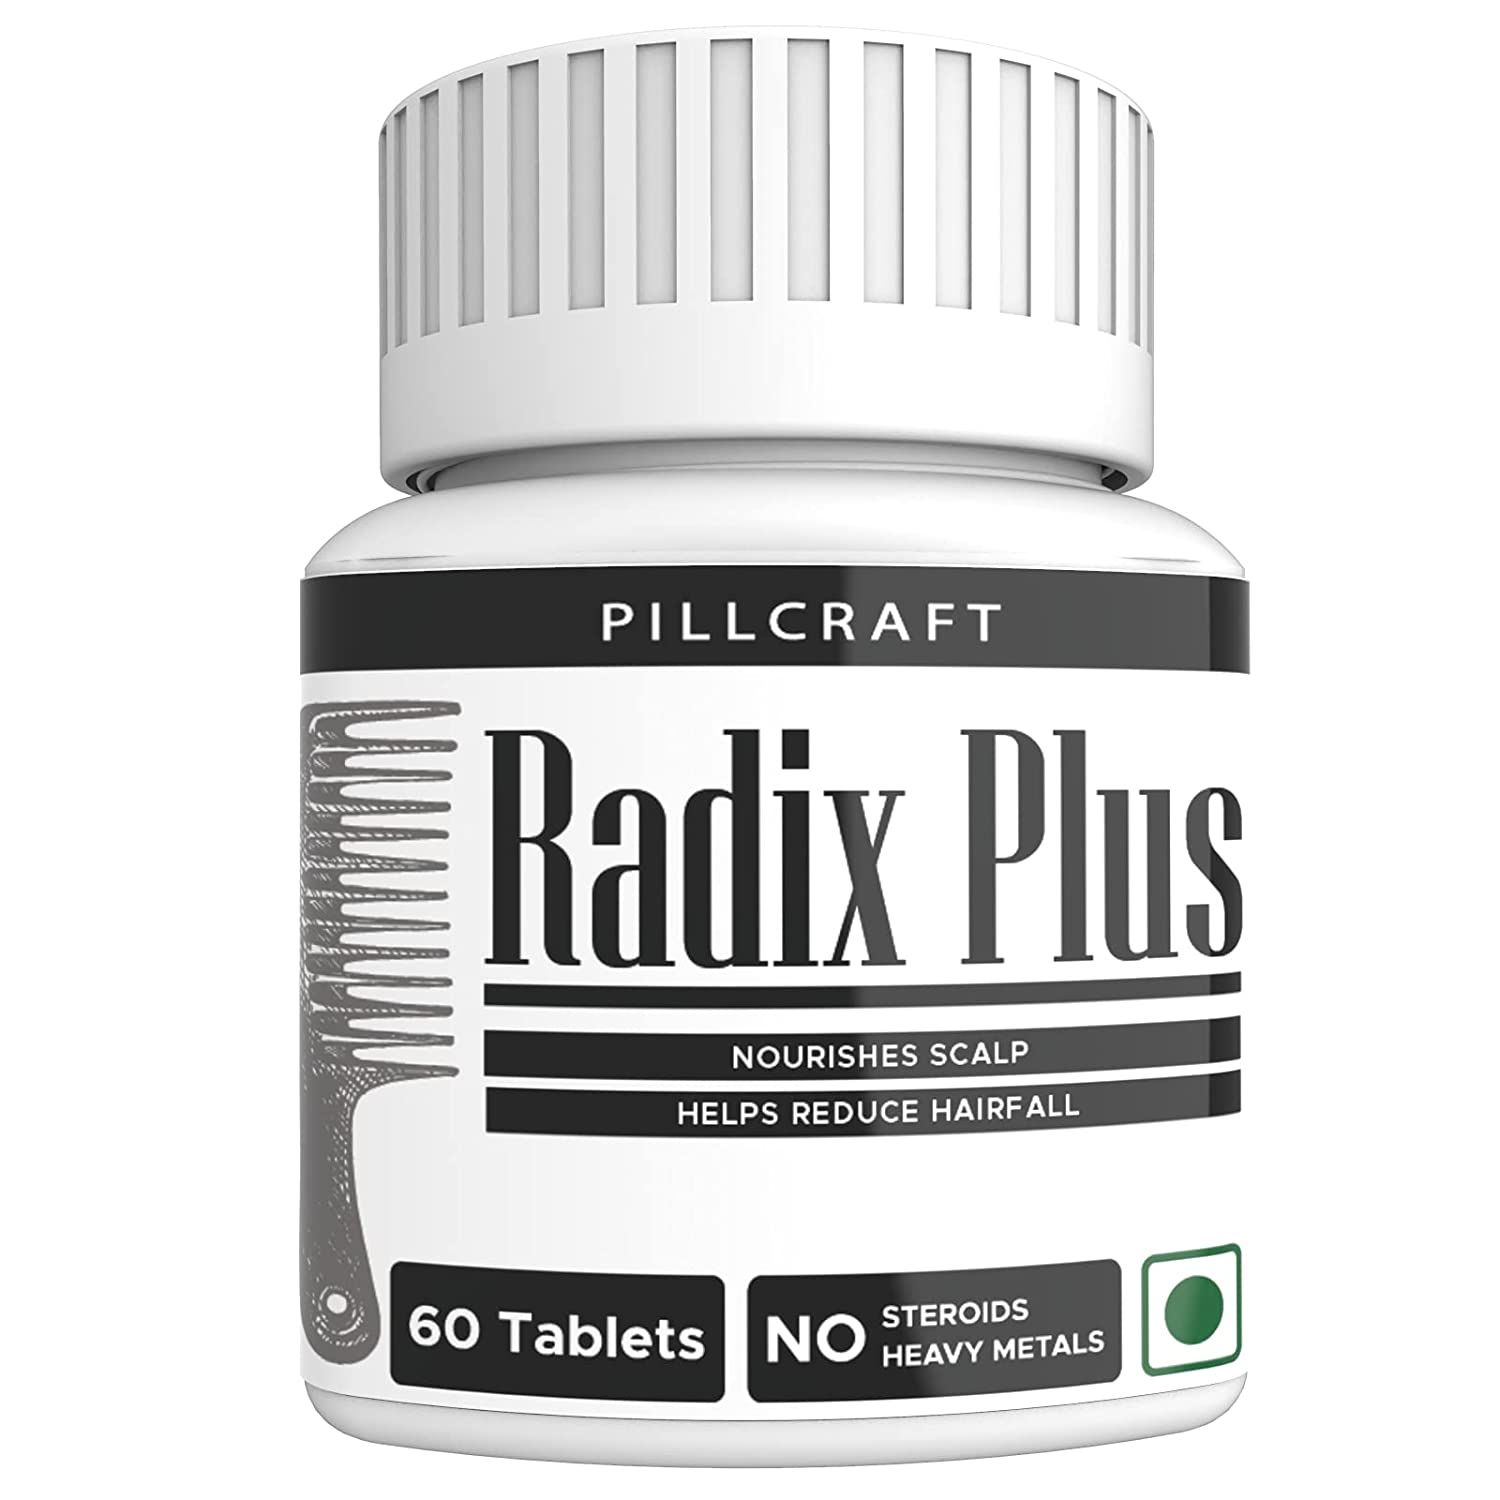 Pillcraft Radix Plus Tablets Image